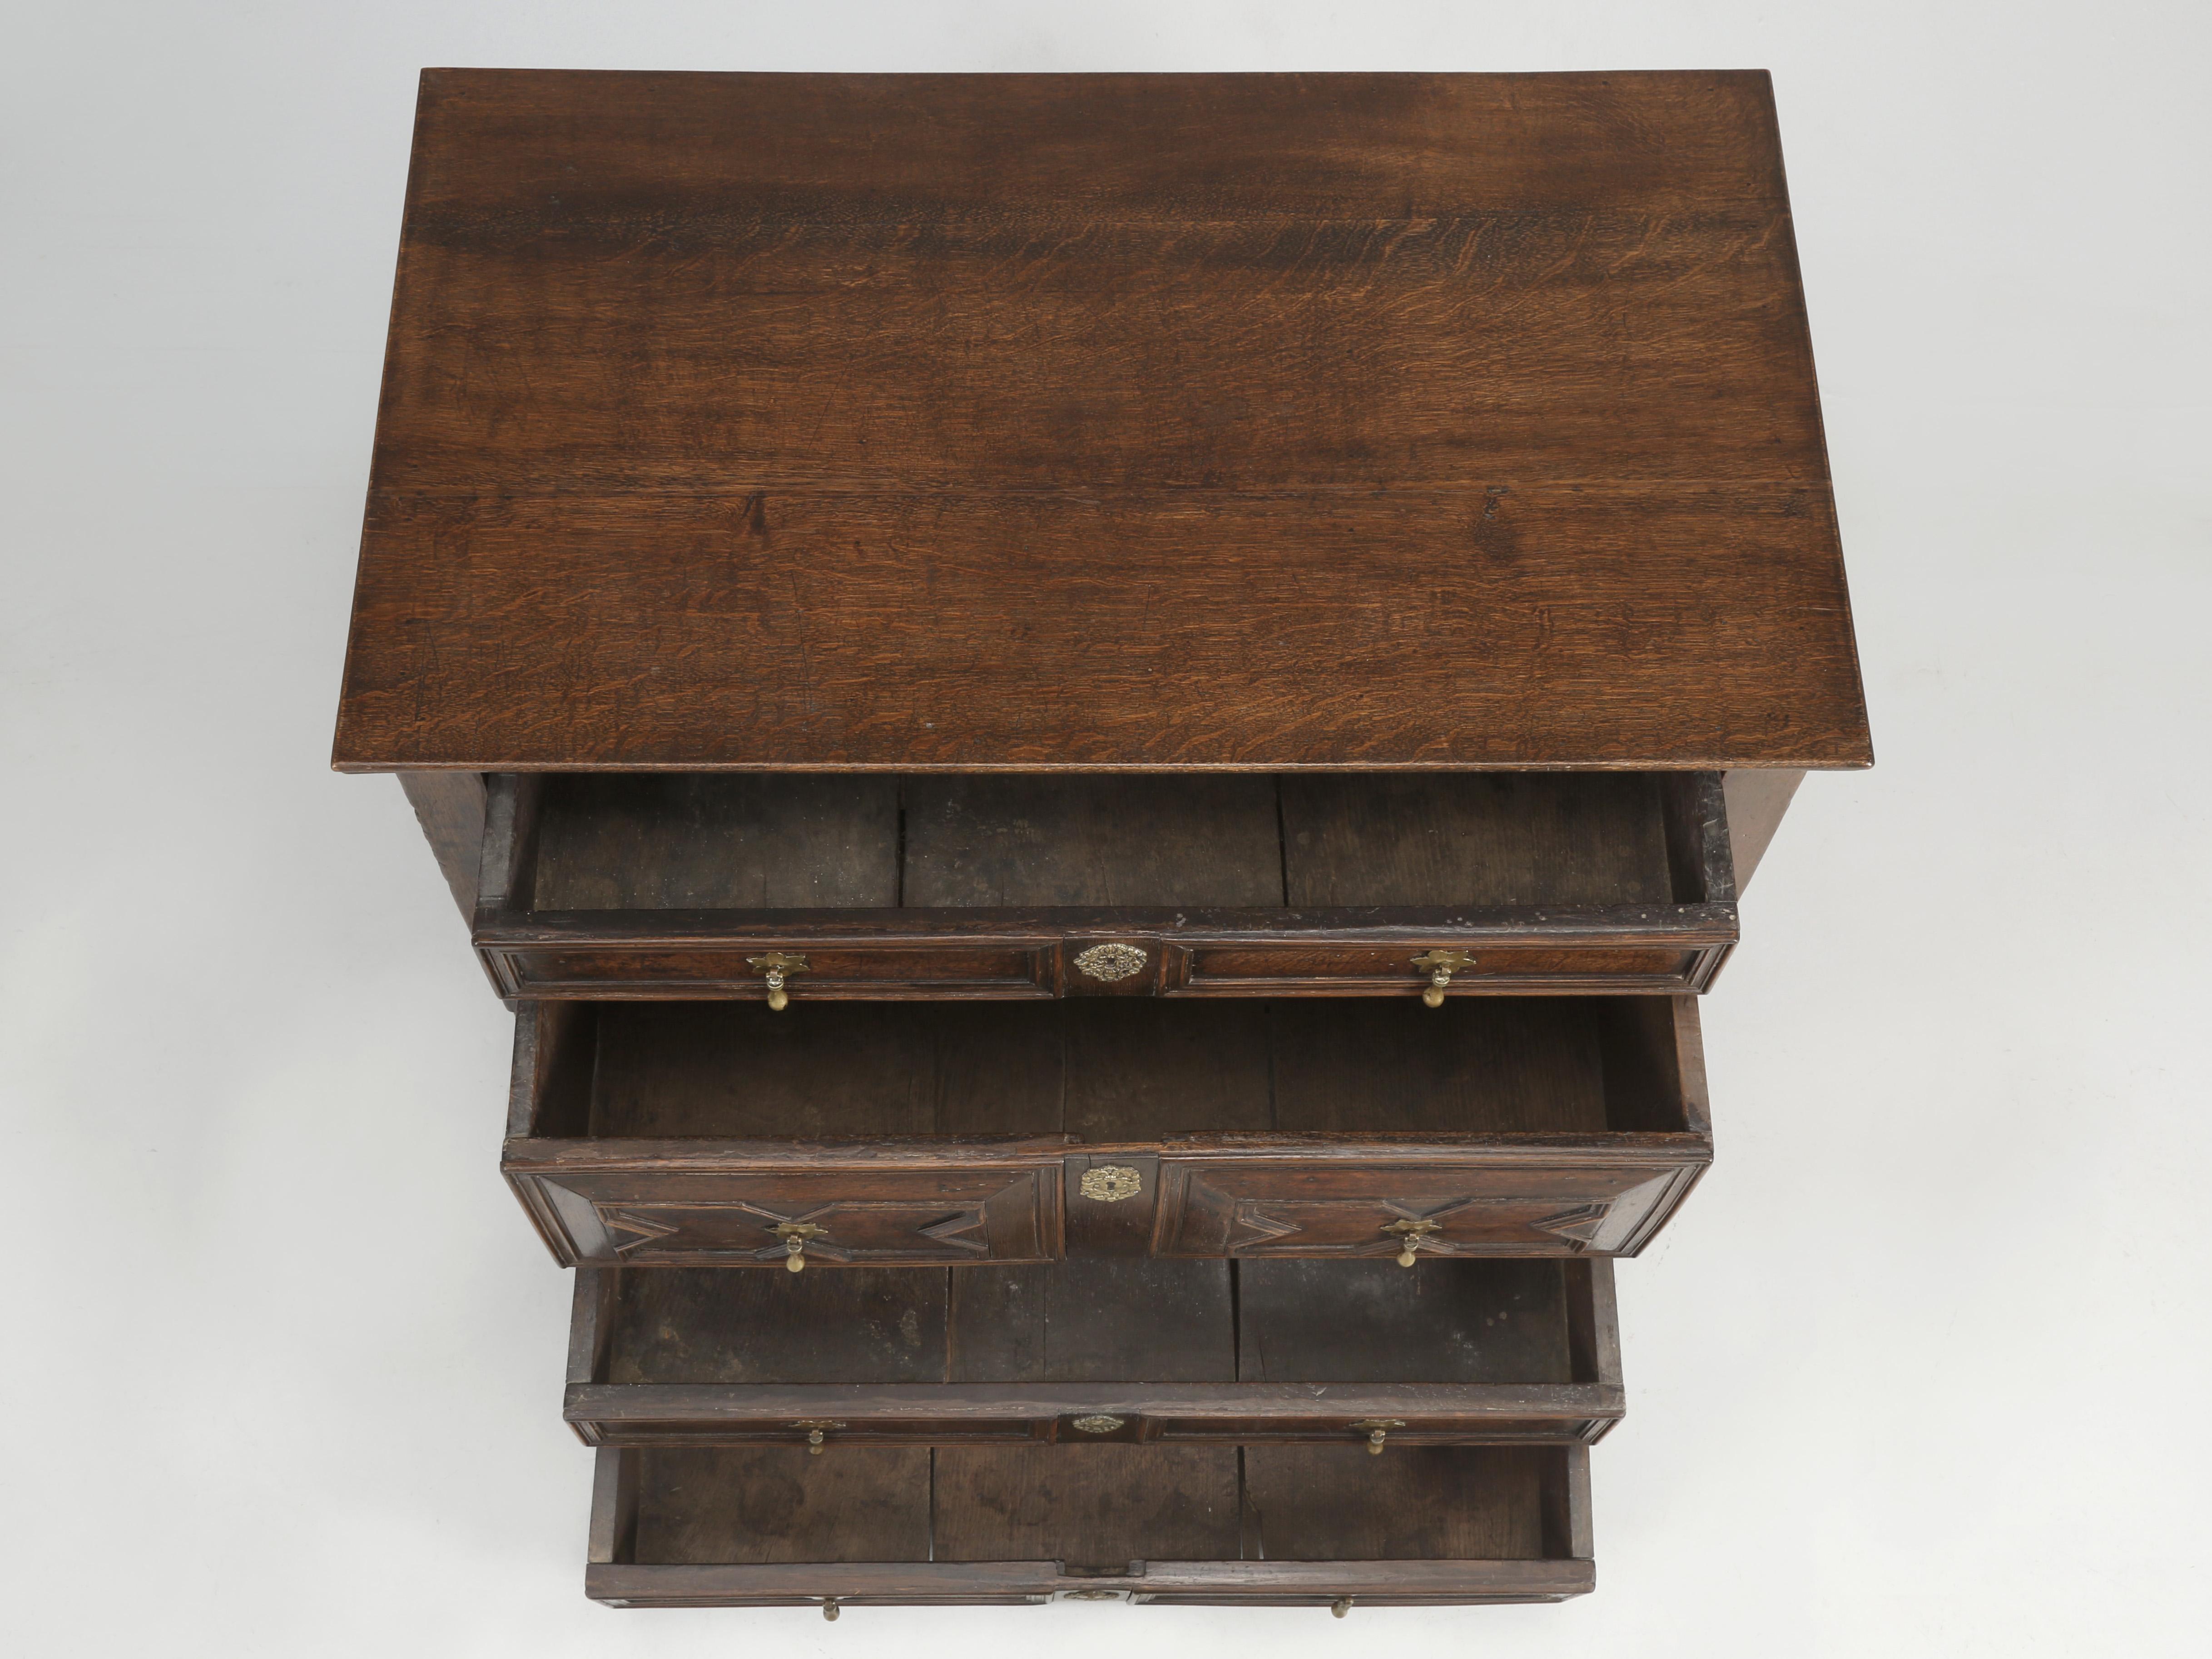 Hand-Carved Antique English Oak Chest of Drawers or Dresser Split Case design, Circa 1700's